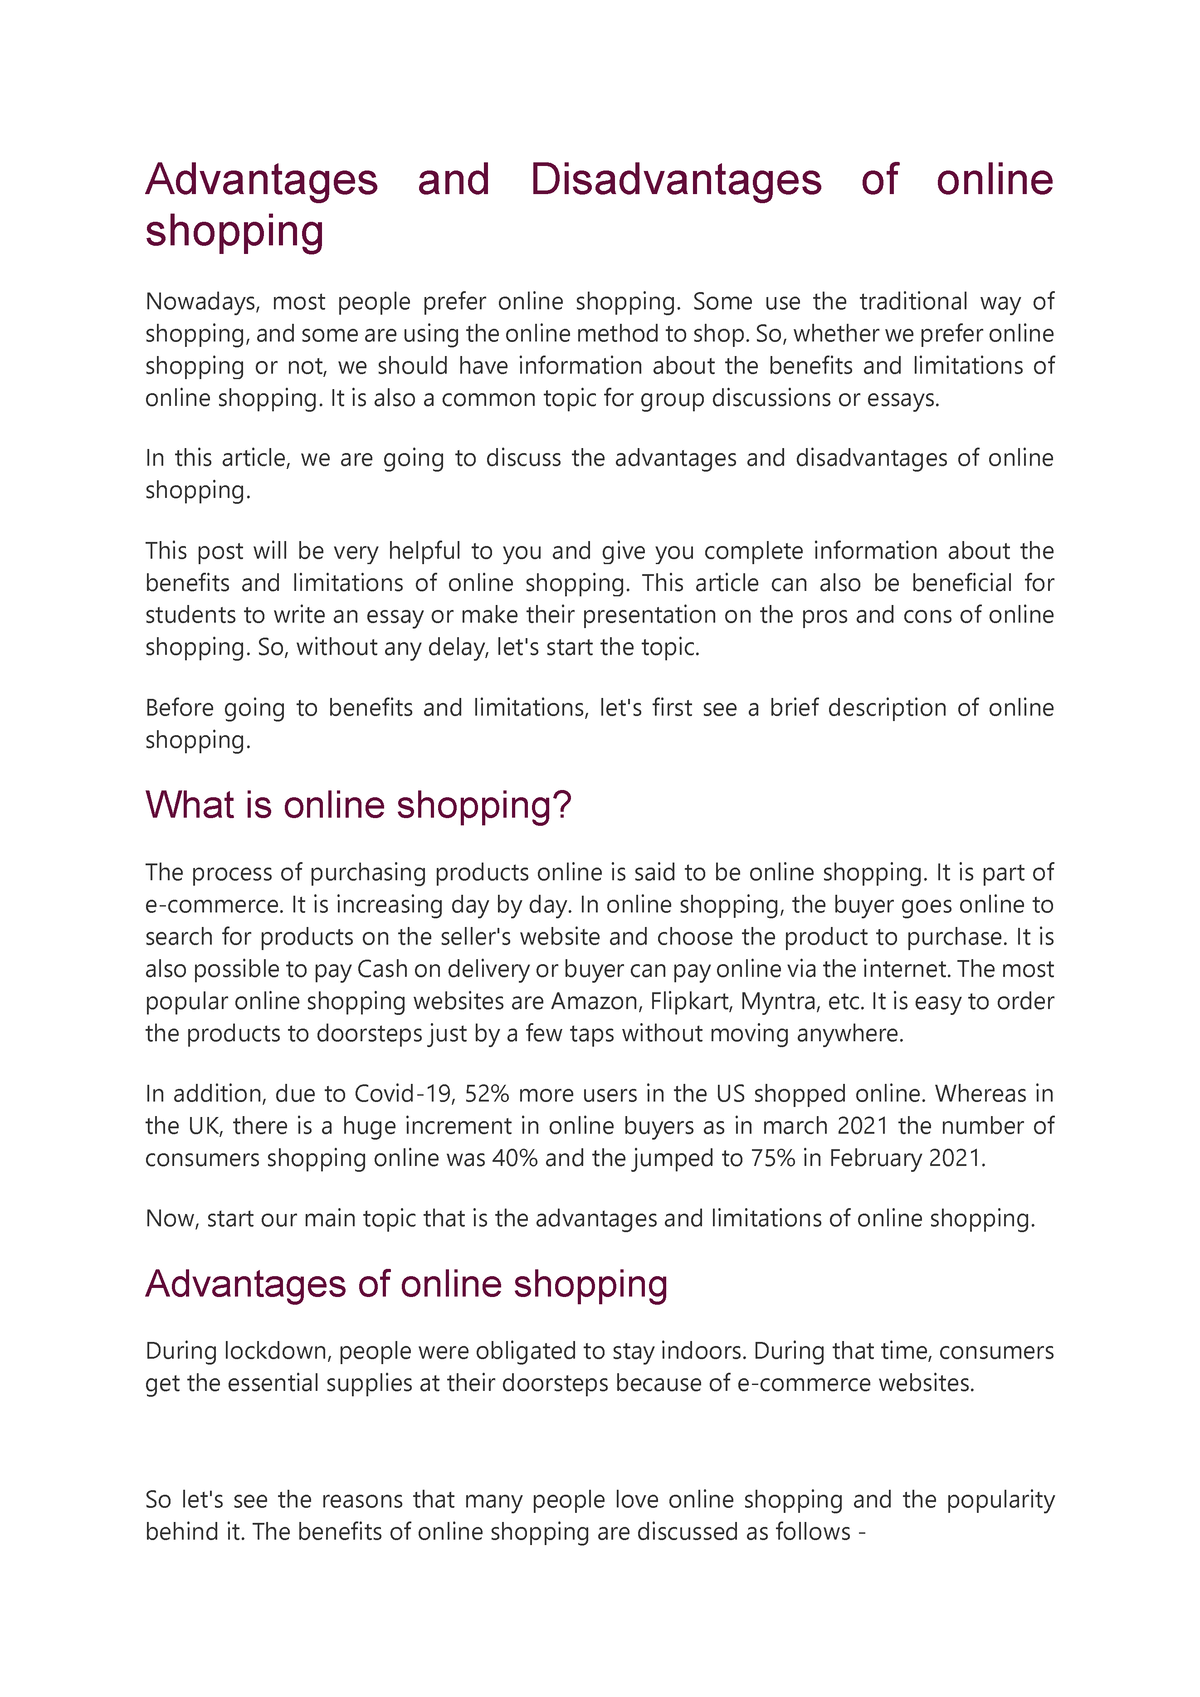 advantages online shopping essay